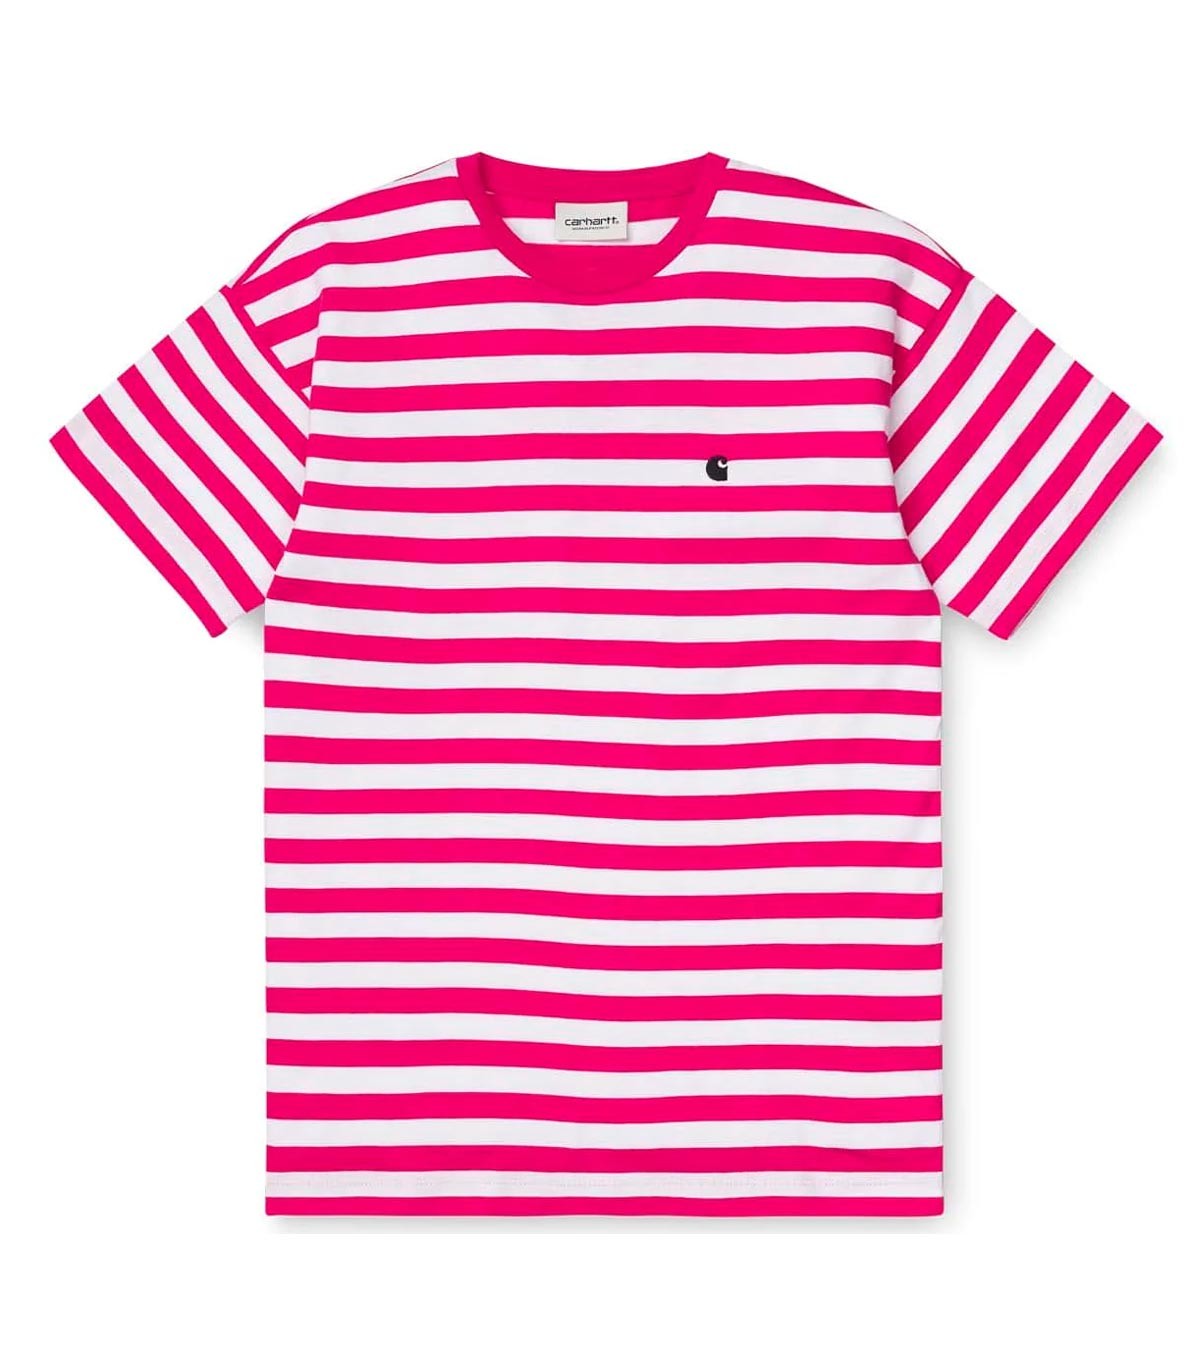 Carhartt Wip - Camiseta a Rayas con Logo - Rosa